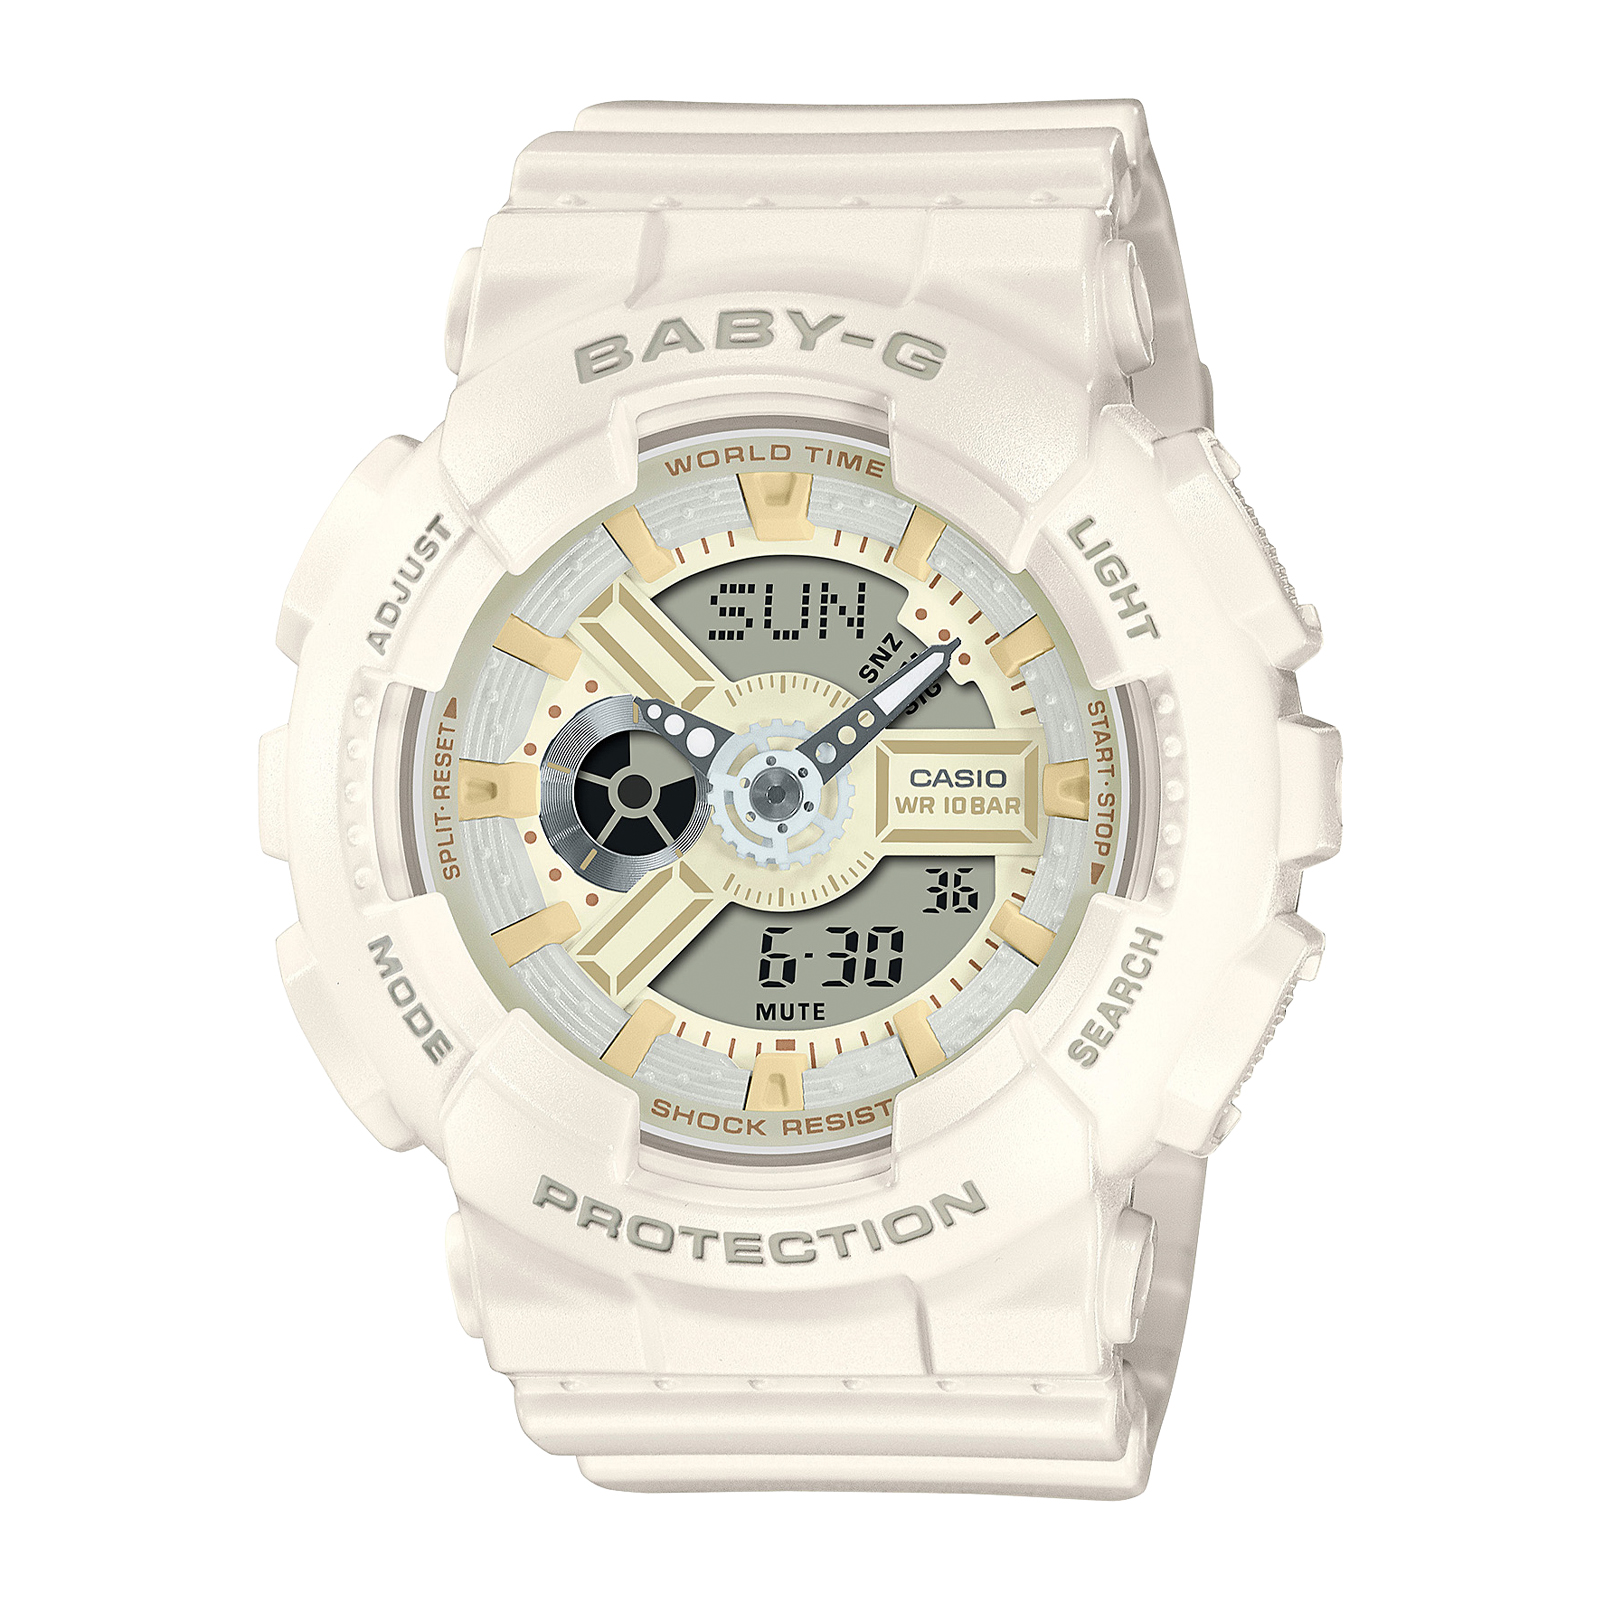 Reloj BABY-G BA-110XSW-7ADR Resina Mujer Blanco